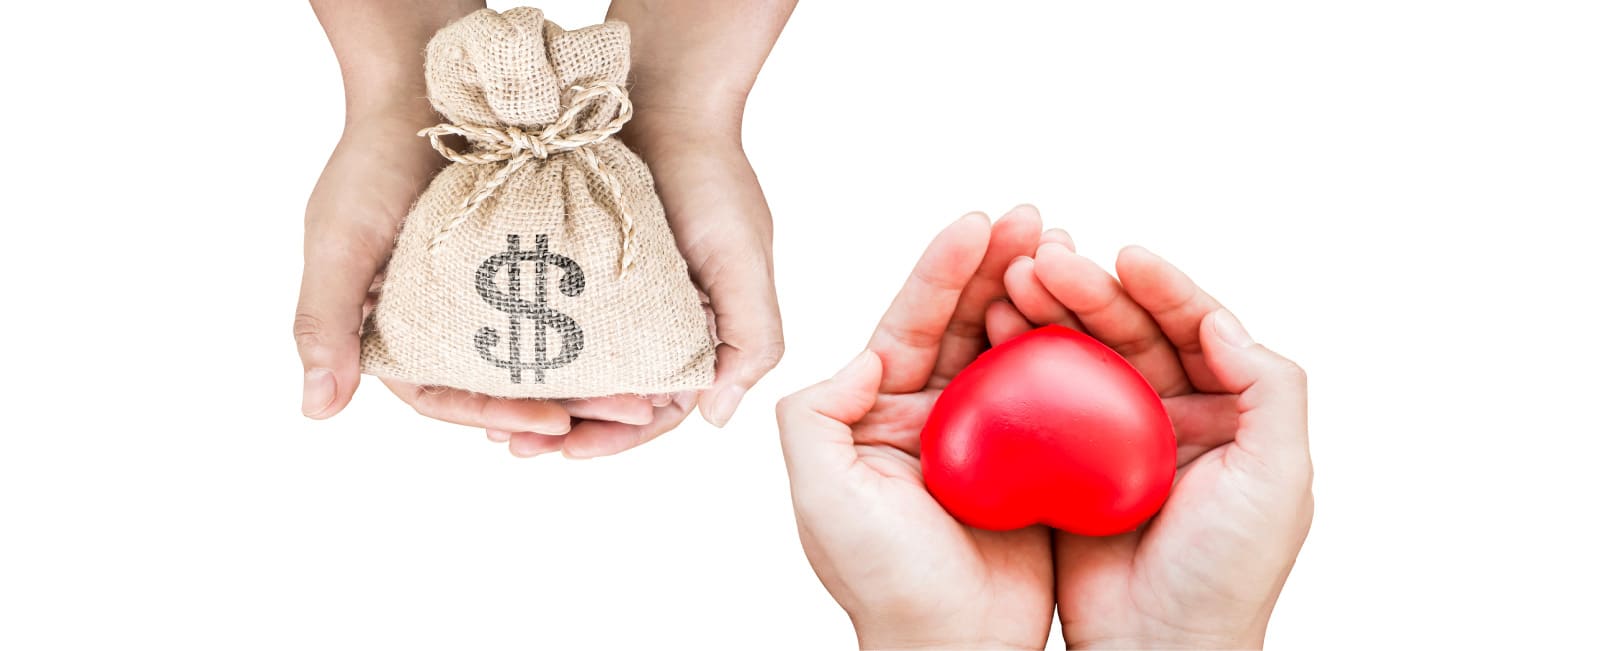 Fringe Benefits Money and Heart Hand